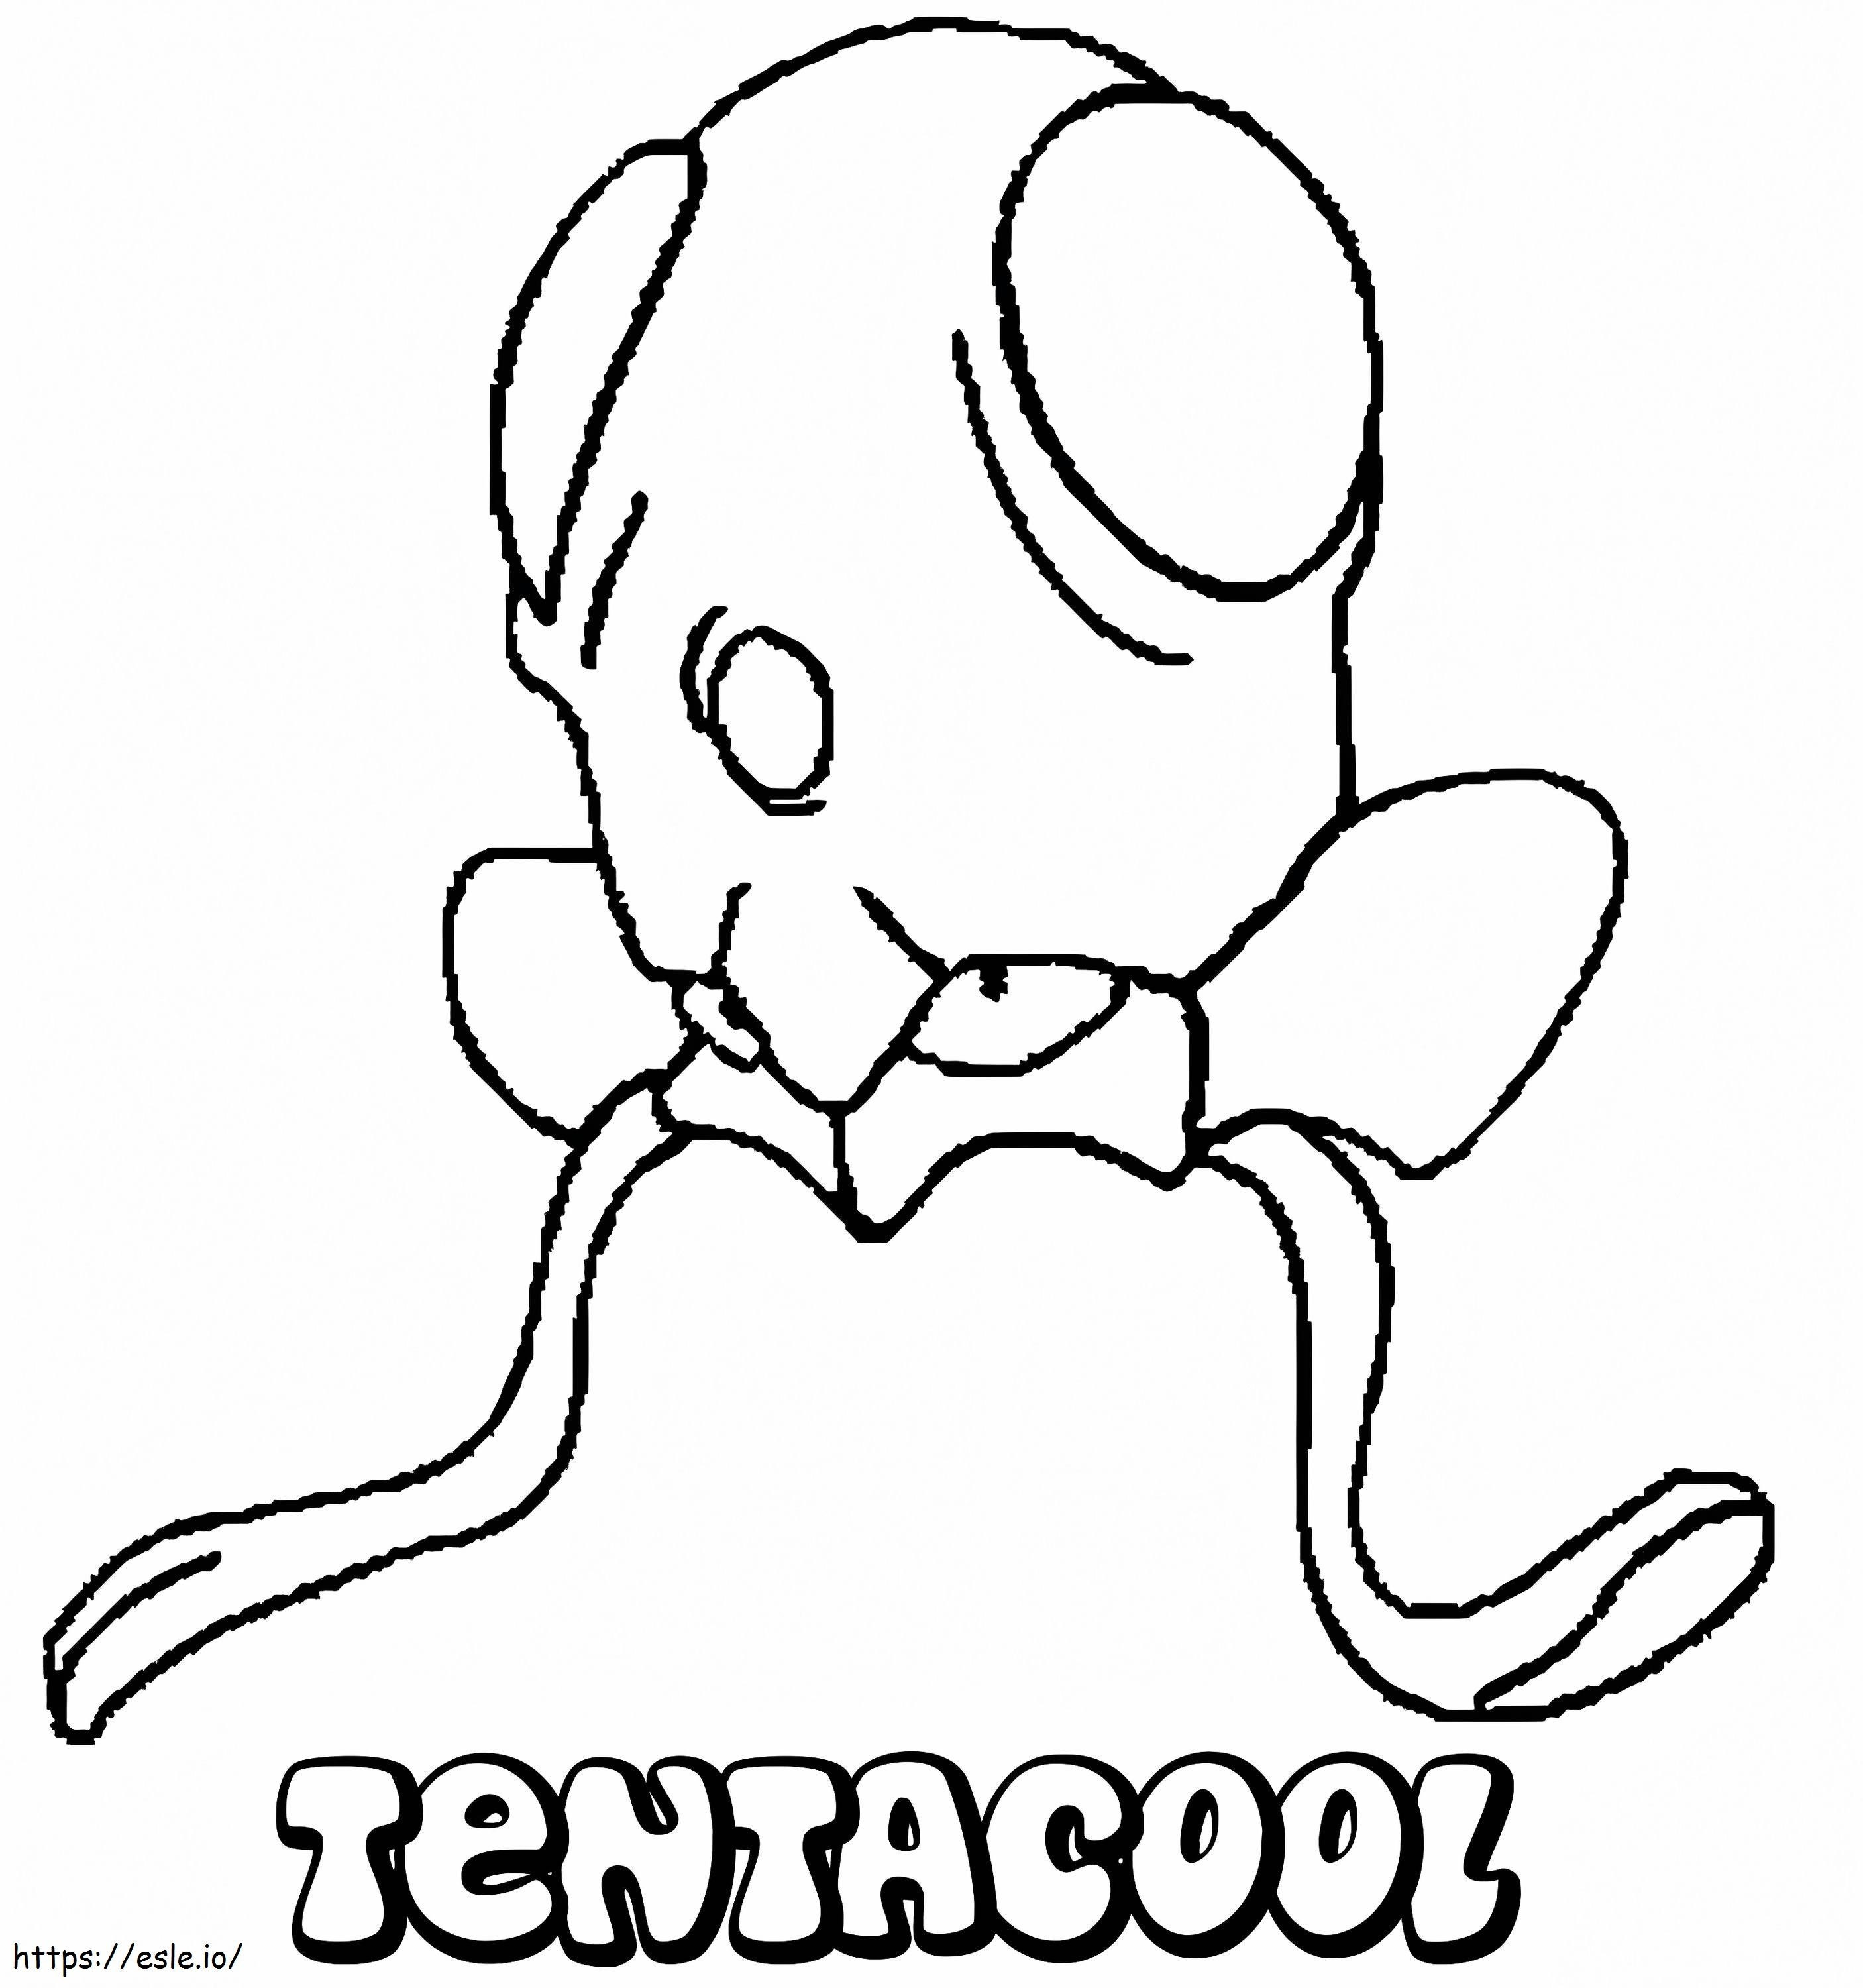 Pokemon Tentacool coloring page